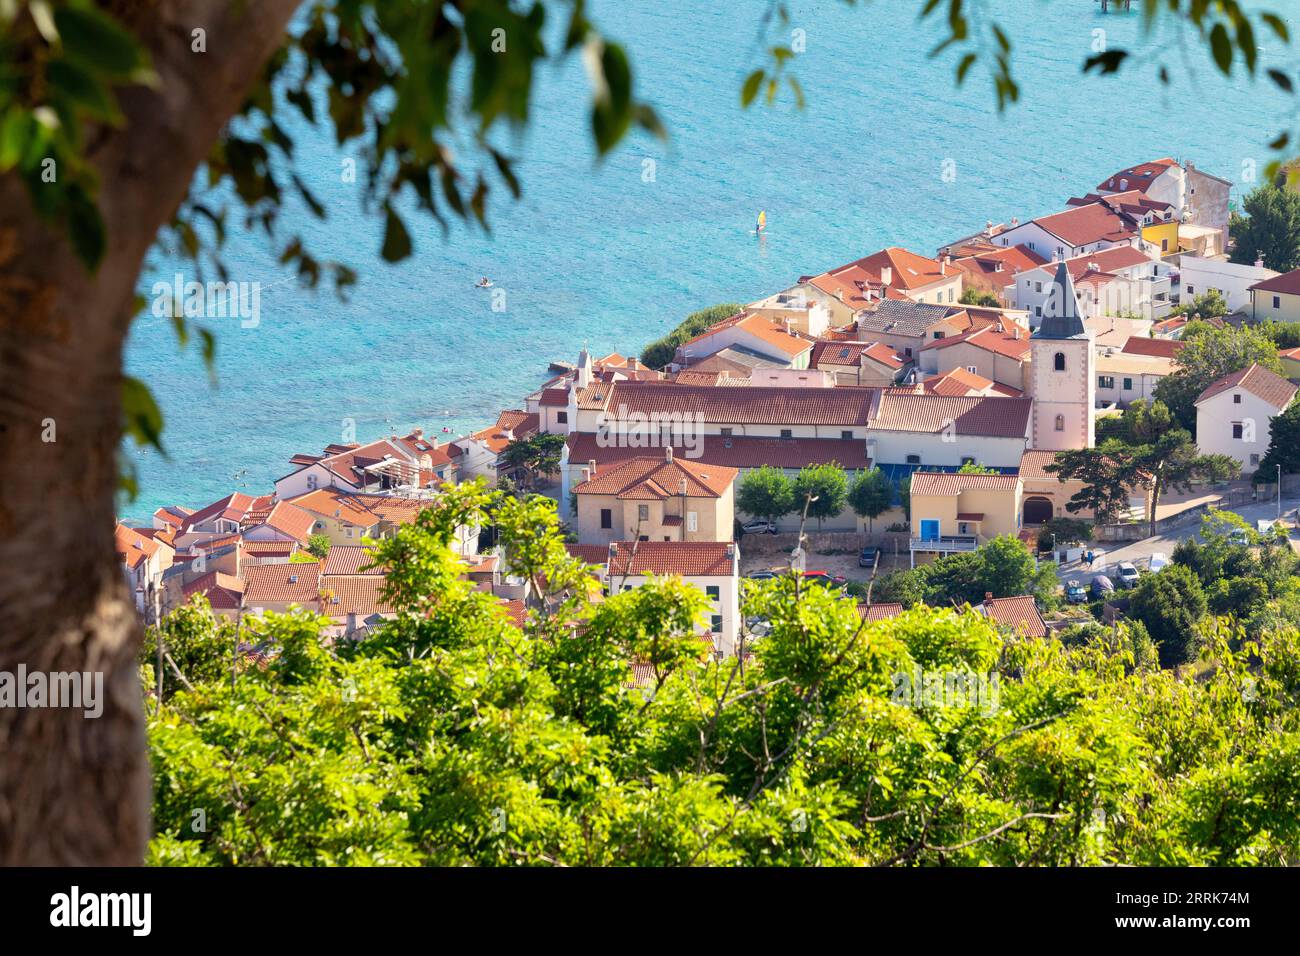 Croatia, Kvarner bay, Primorje Gorski Kotar County, island of Krk, elevated view of Baska, tourist resort on the Adriatic sea Stock Photo